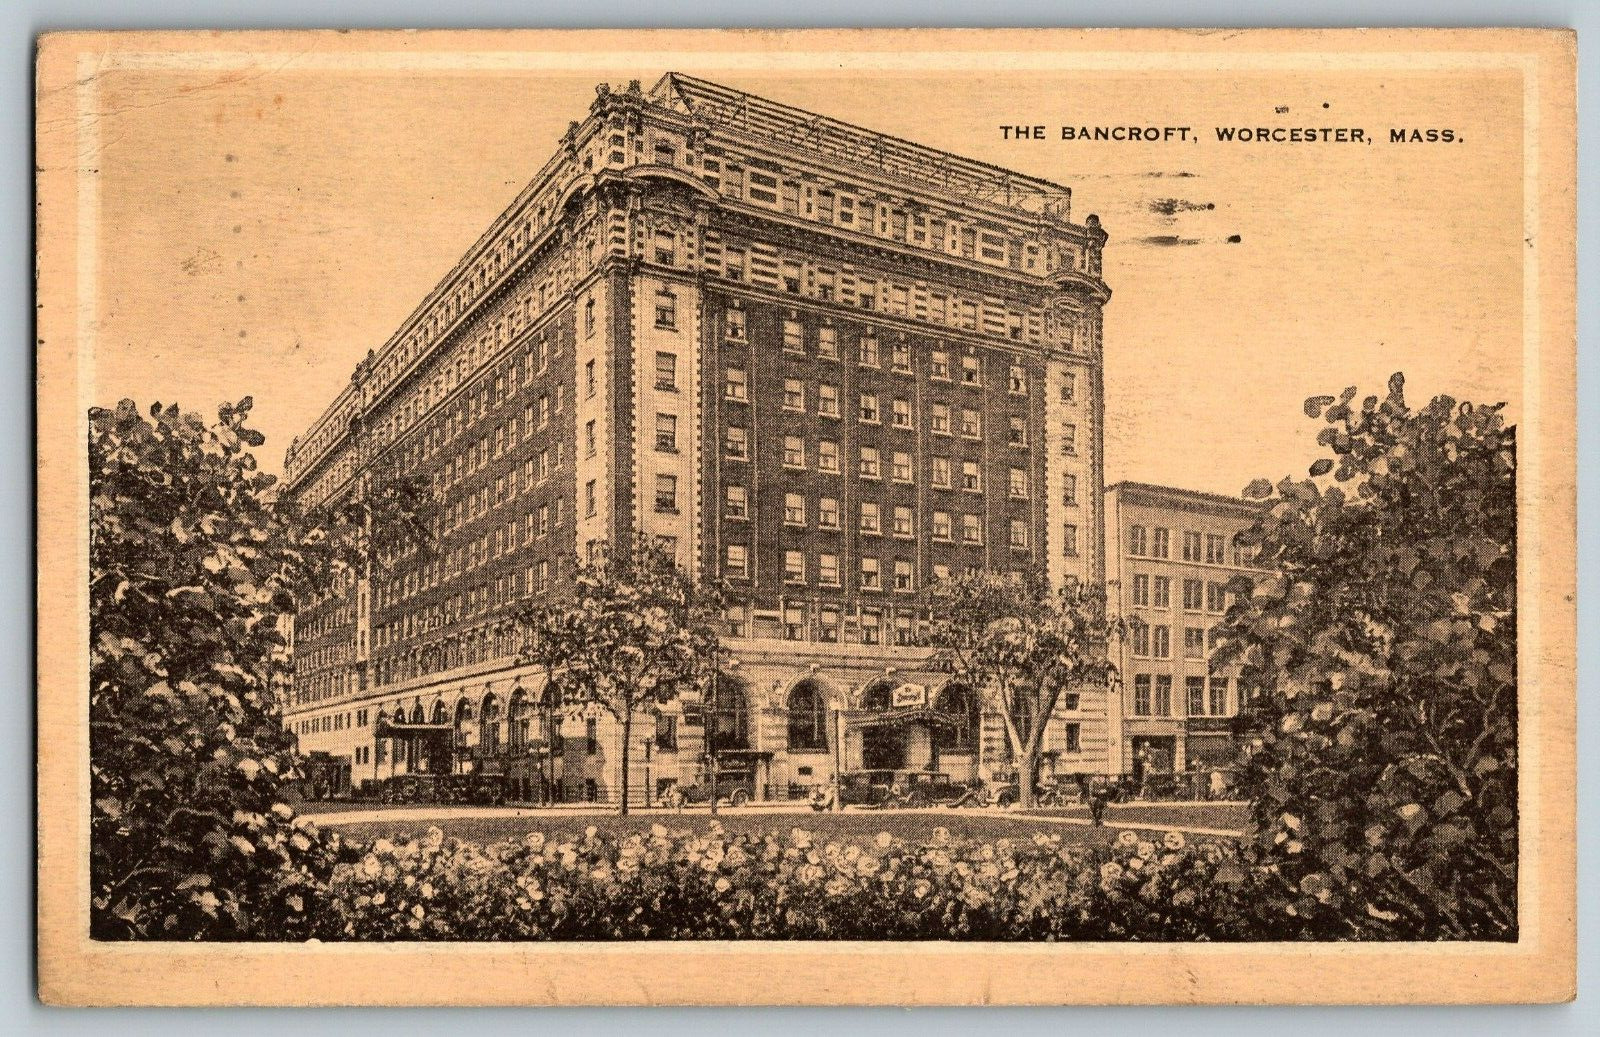 Worcester, Massachusetts - The Bancroft Hotel - Vintage Postcard - Posted